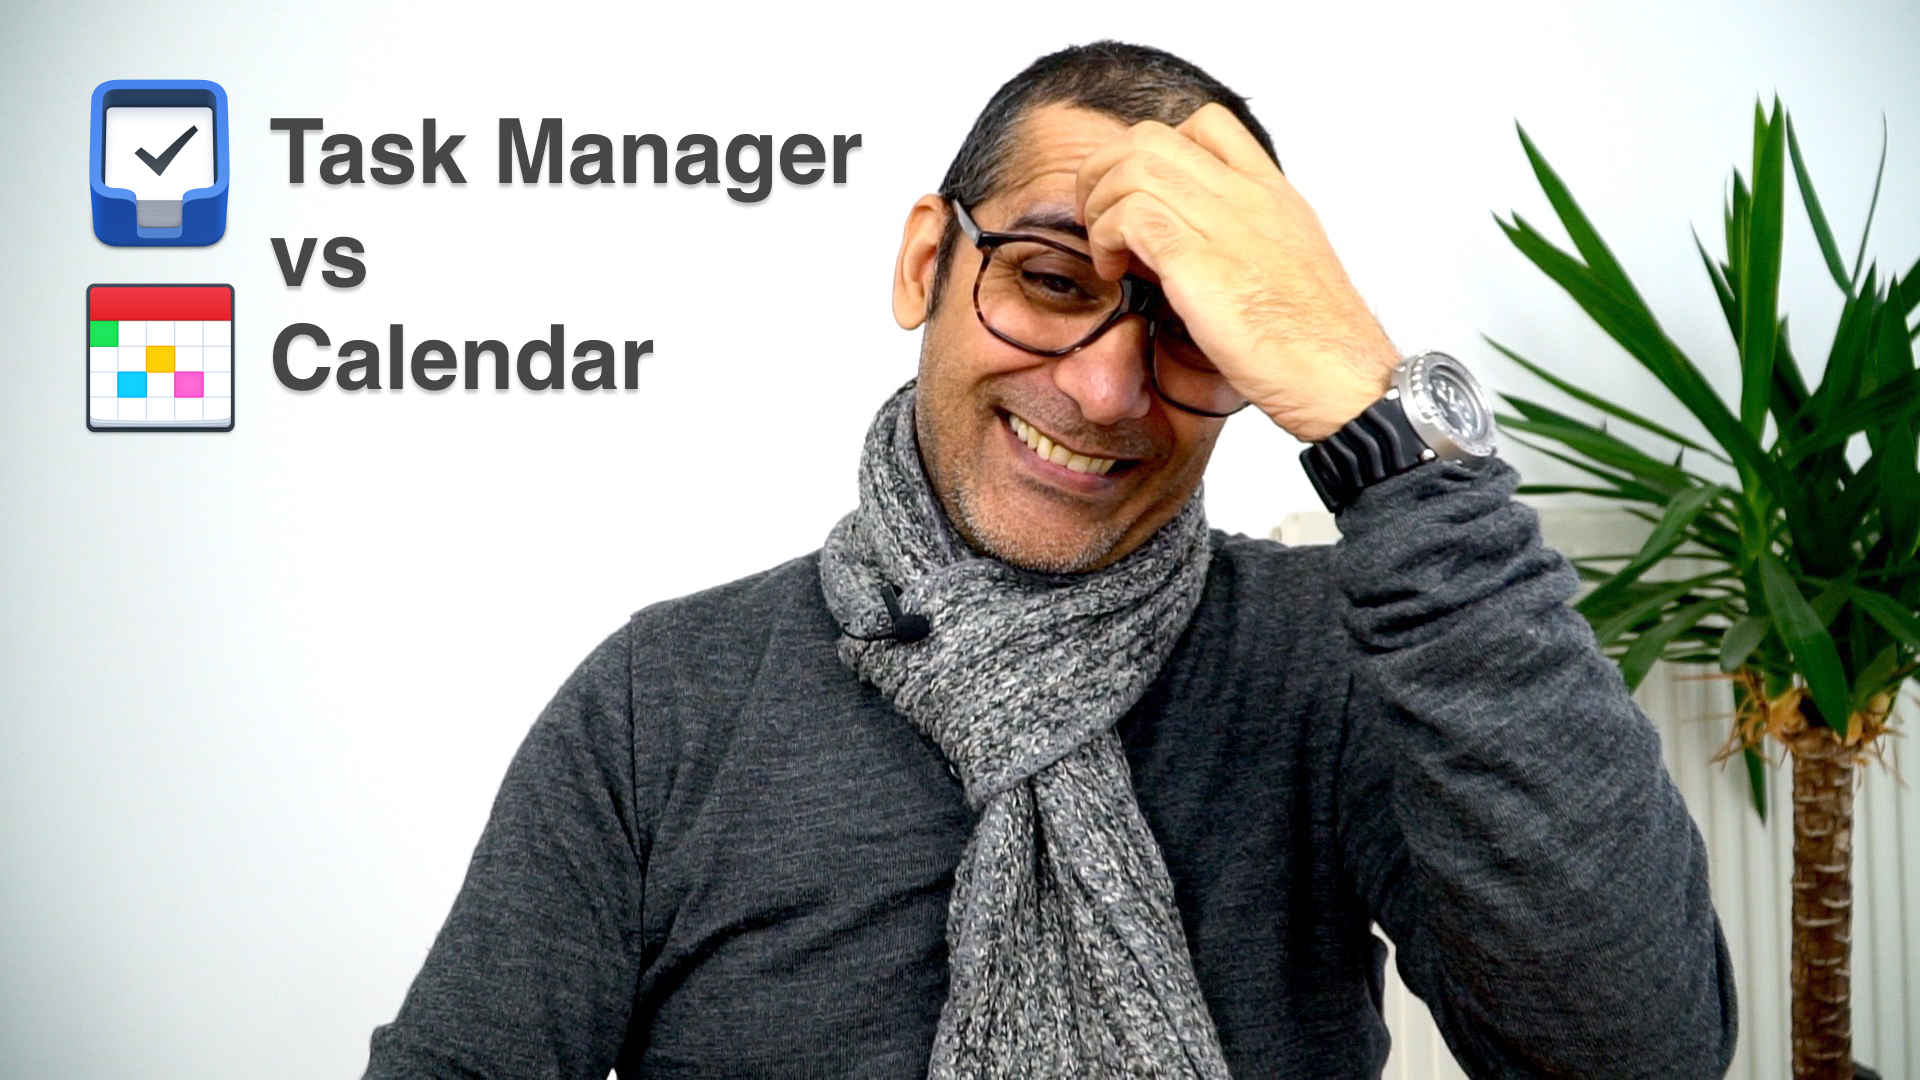 Using a calendar vs a task manager